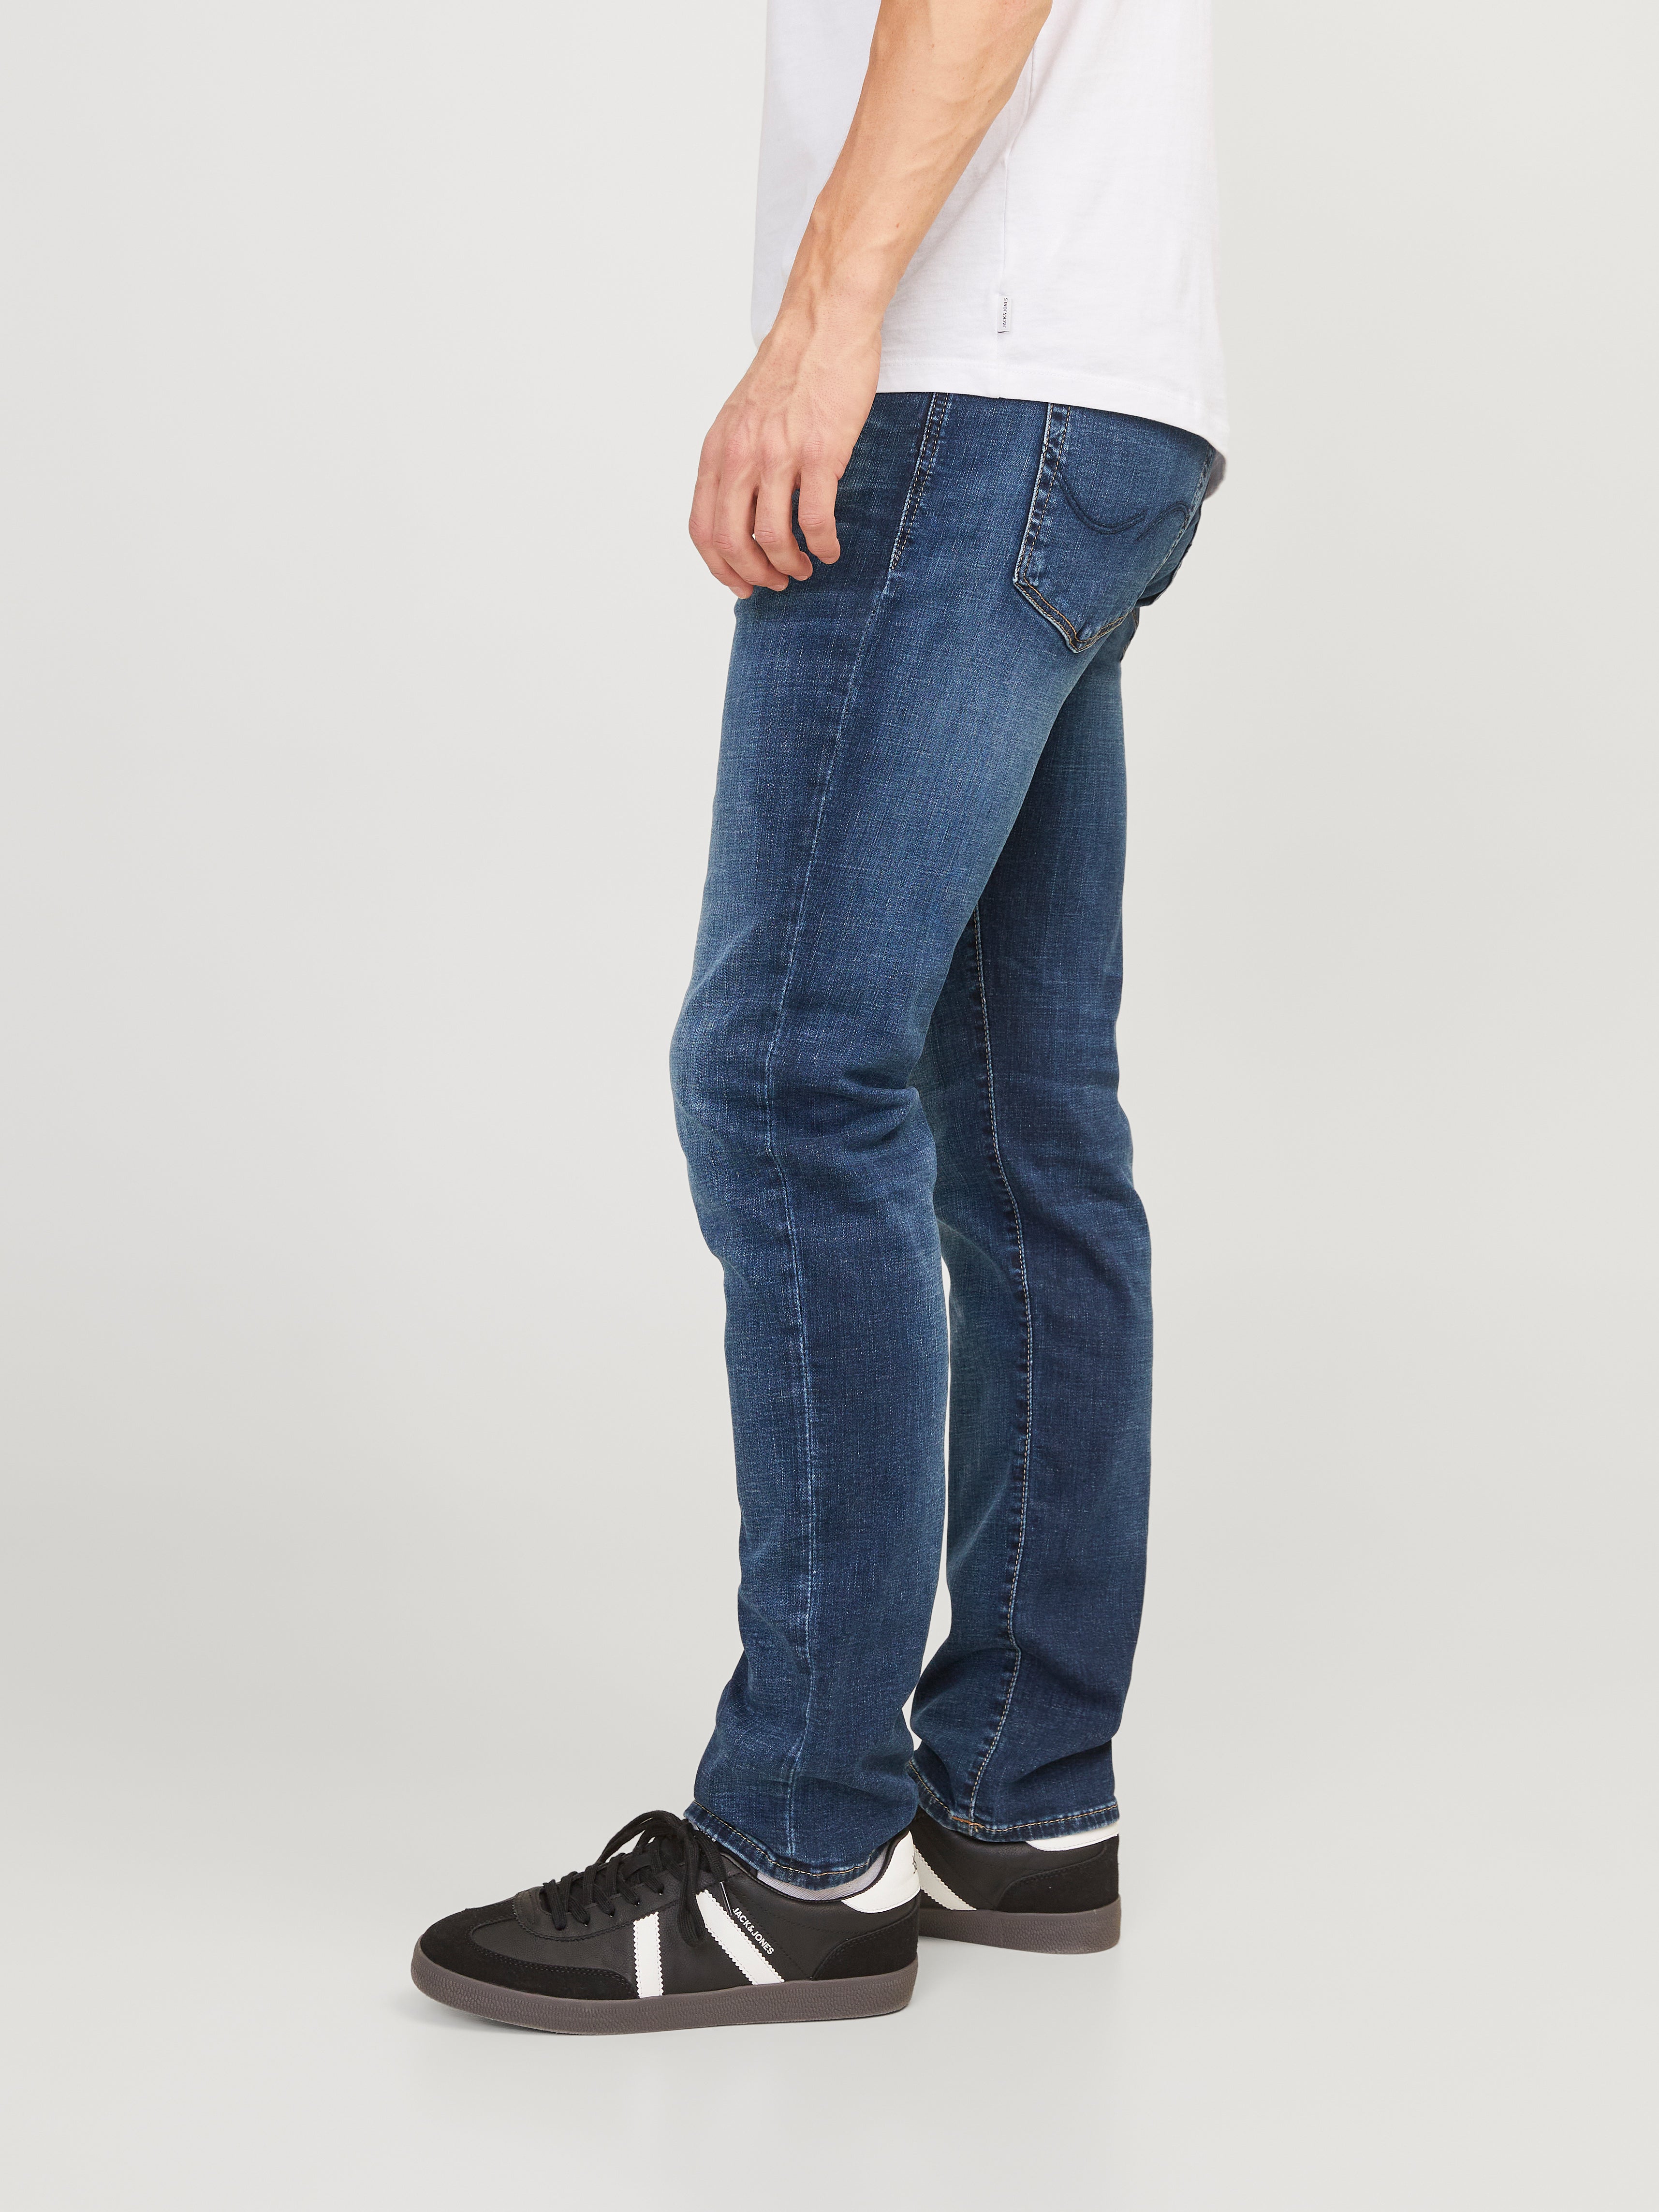 Jack & Jones takes Infinna denim jeans to market - insidedenim